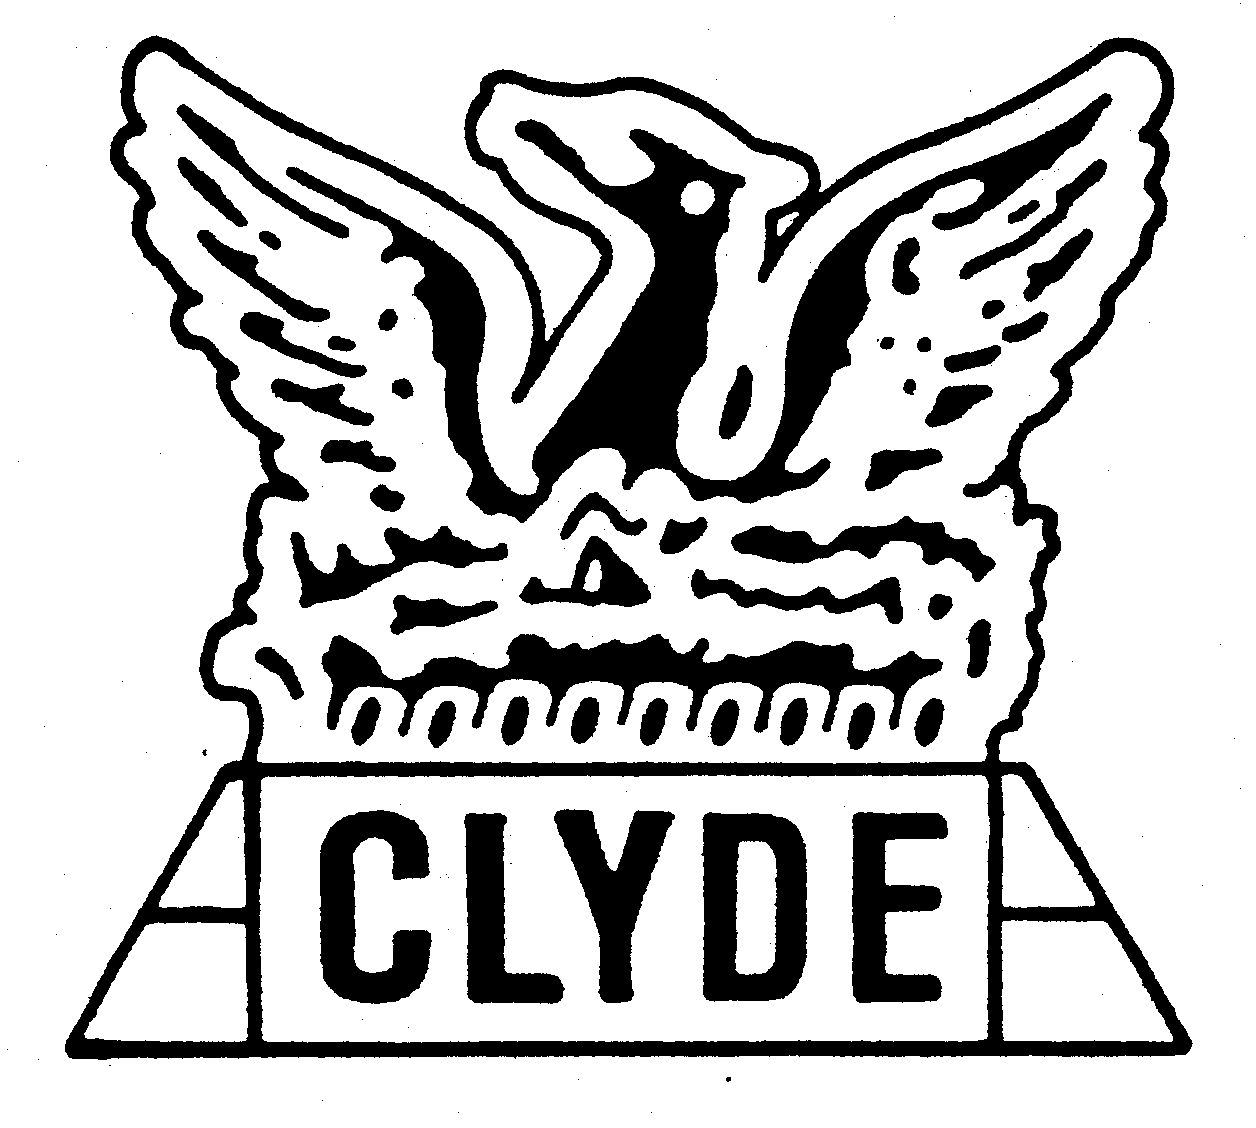 CLYDE